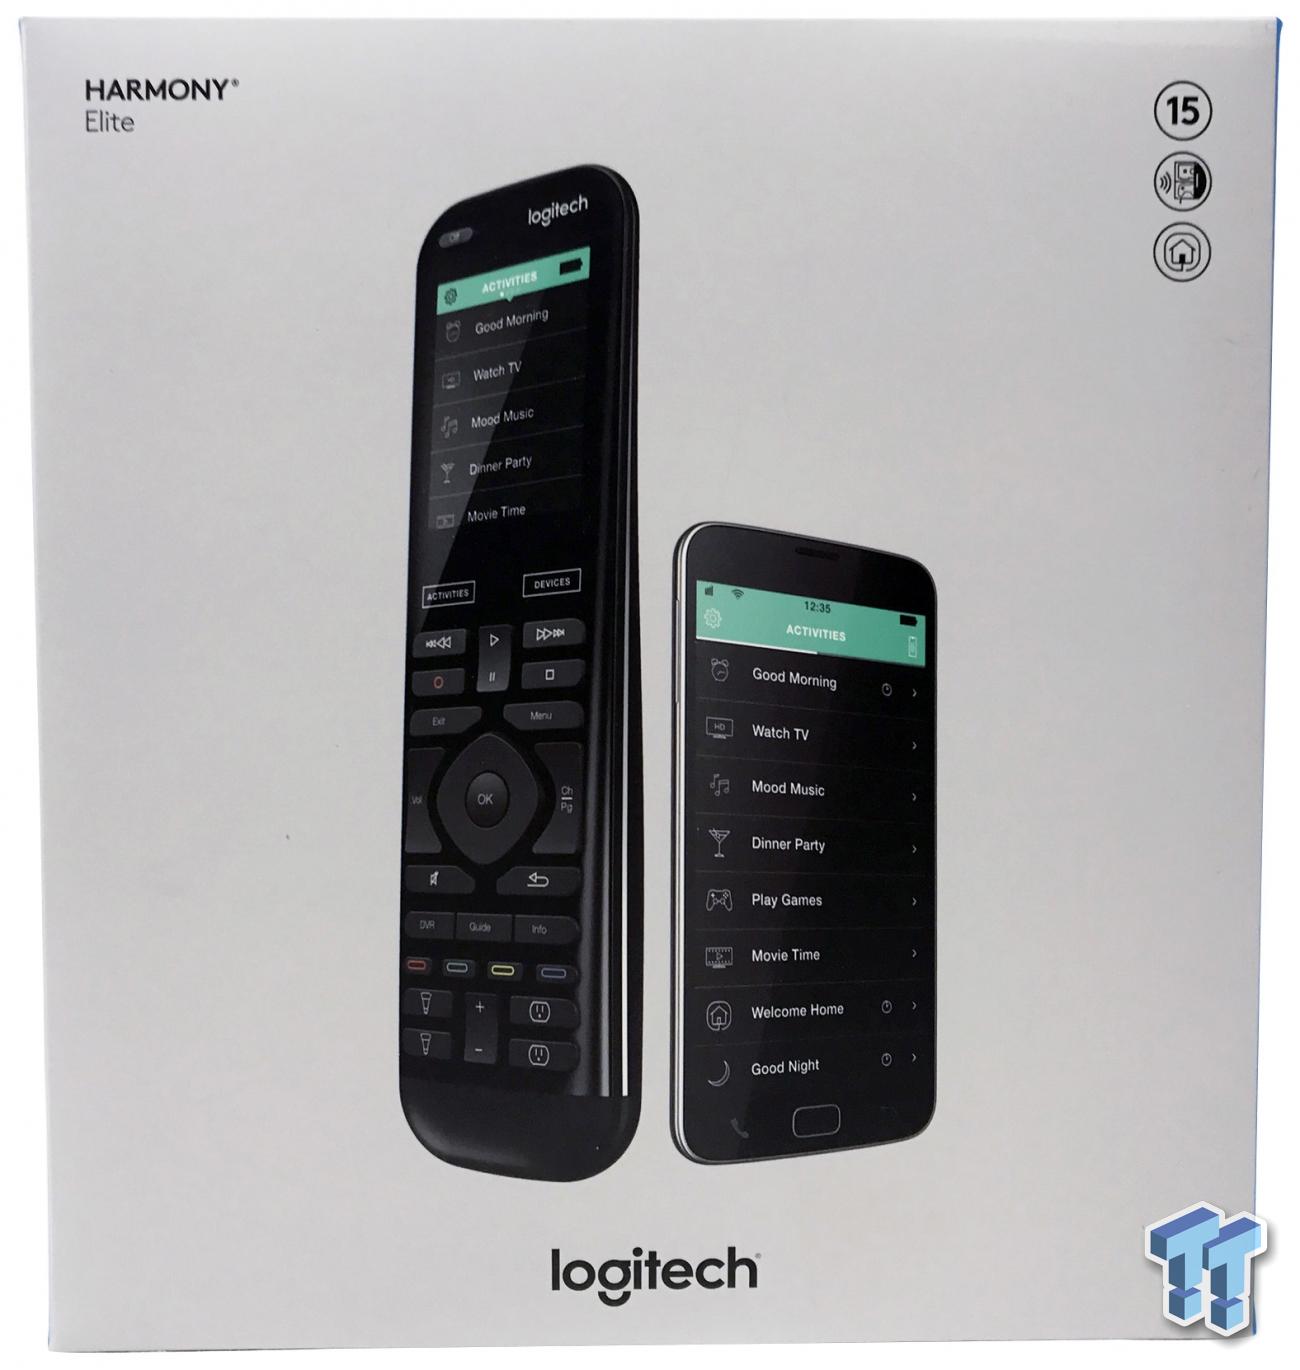 logitech harmony elite remote control